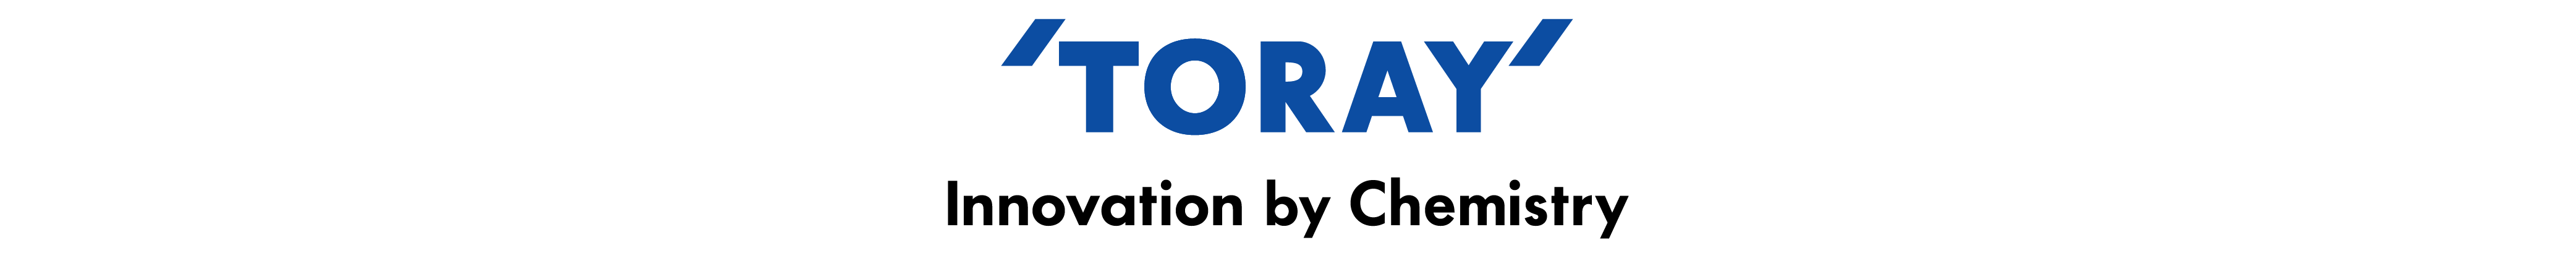 Toray: Innovation by Chemistry logo